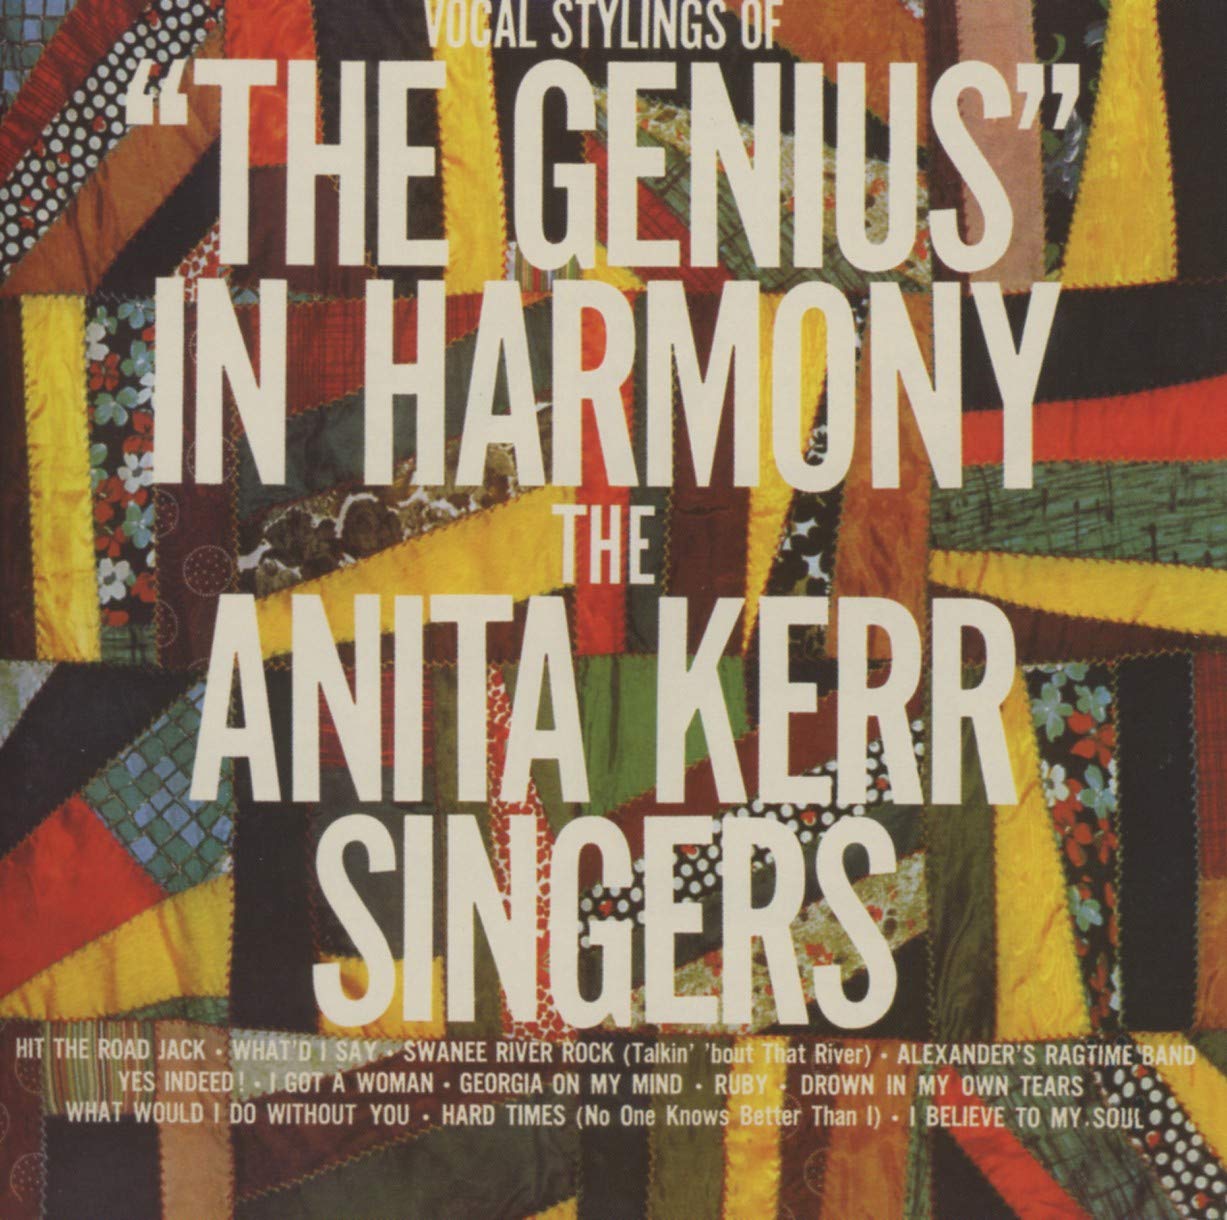 Anita Kerr Singers